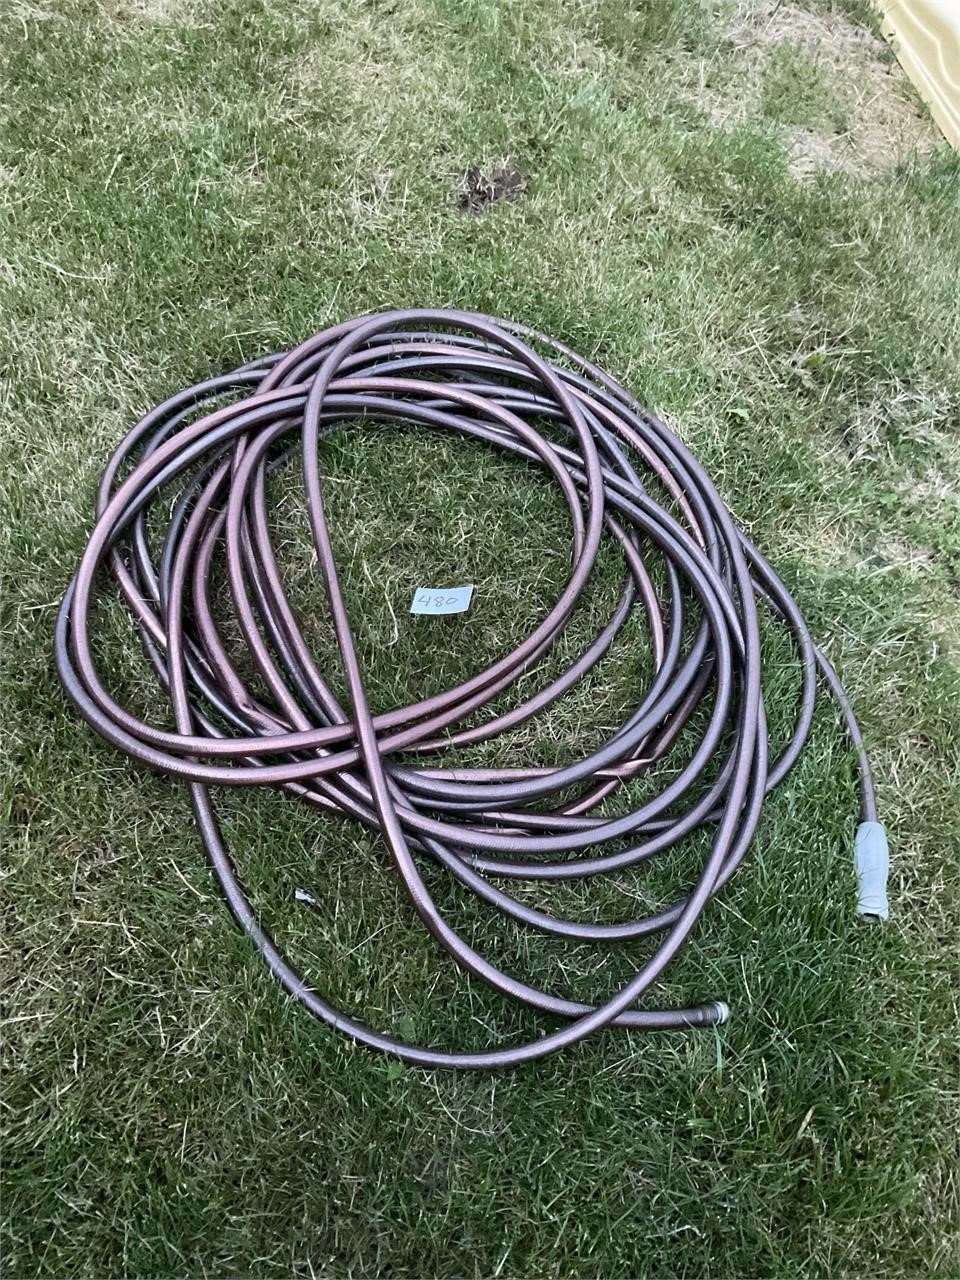 100 foot brown garden hose